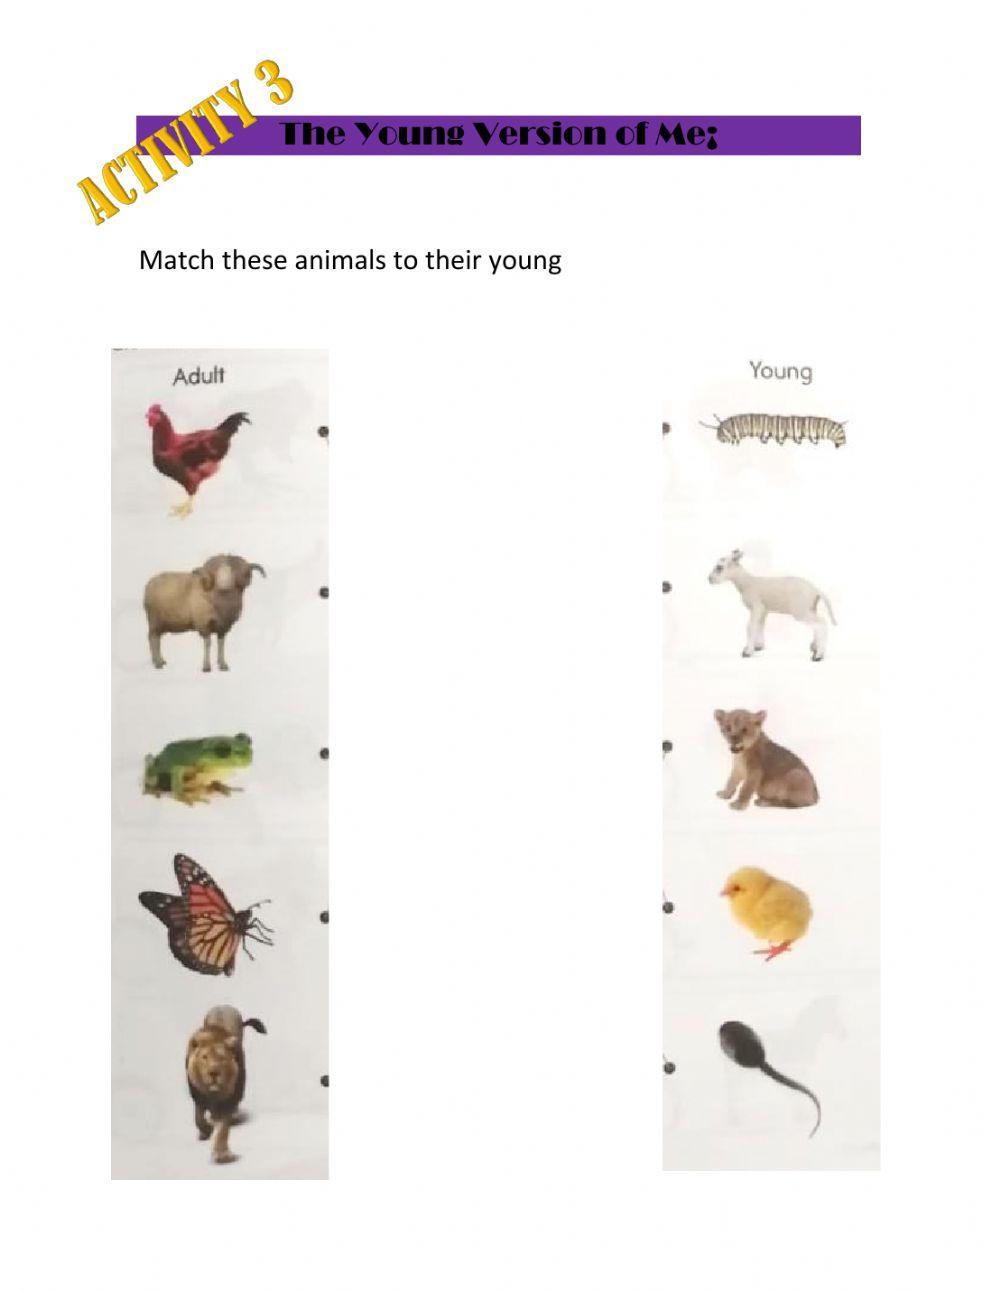 Characteristics of the animals